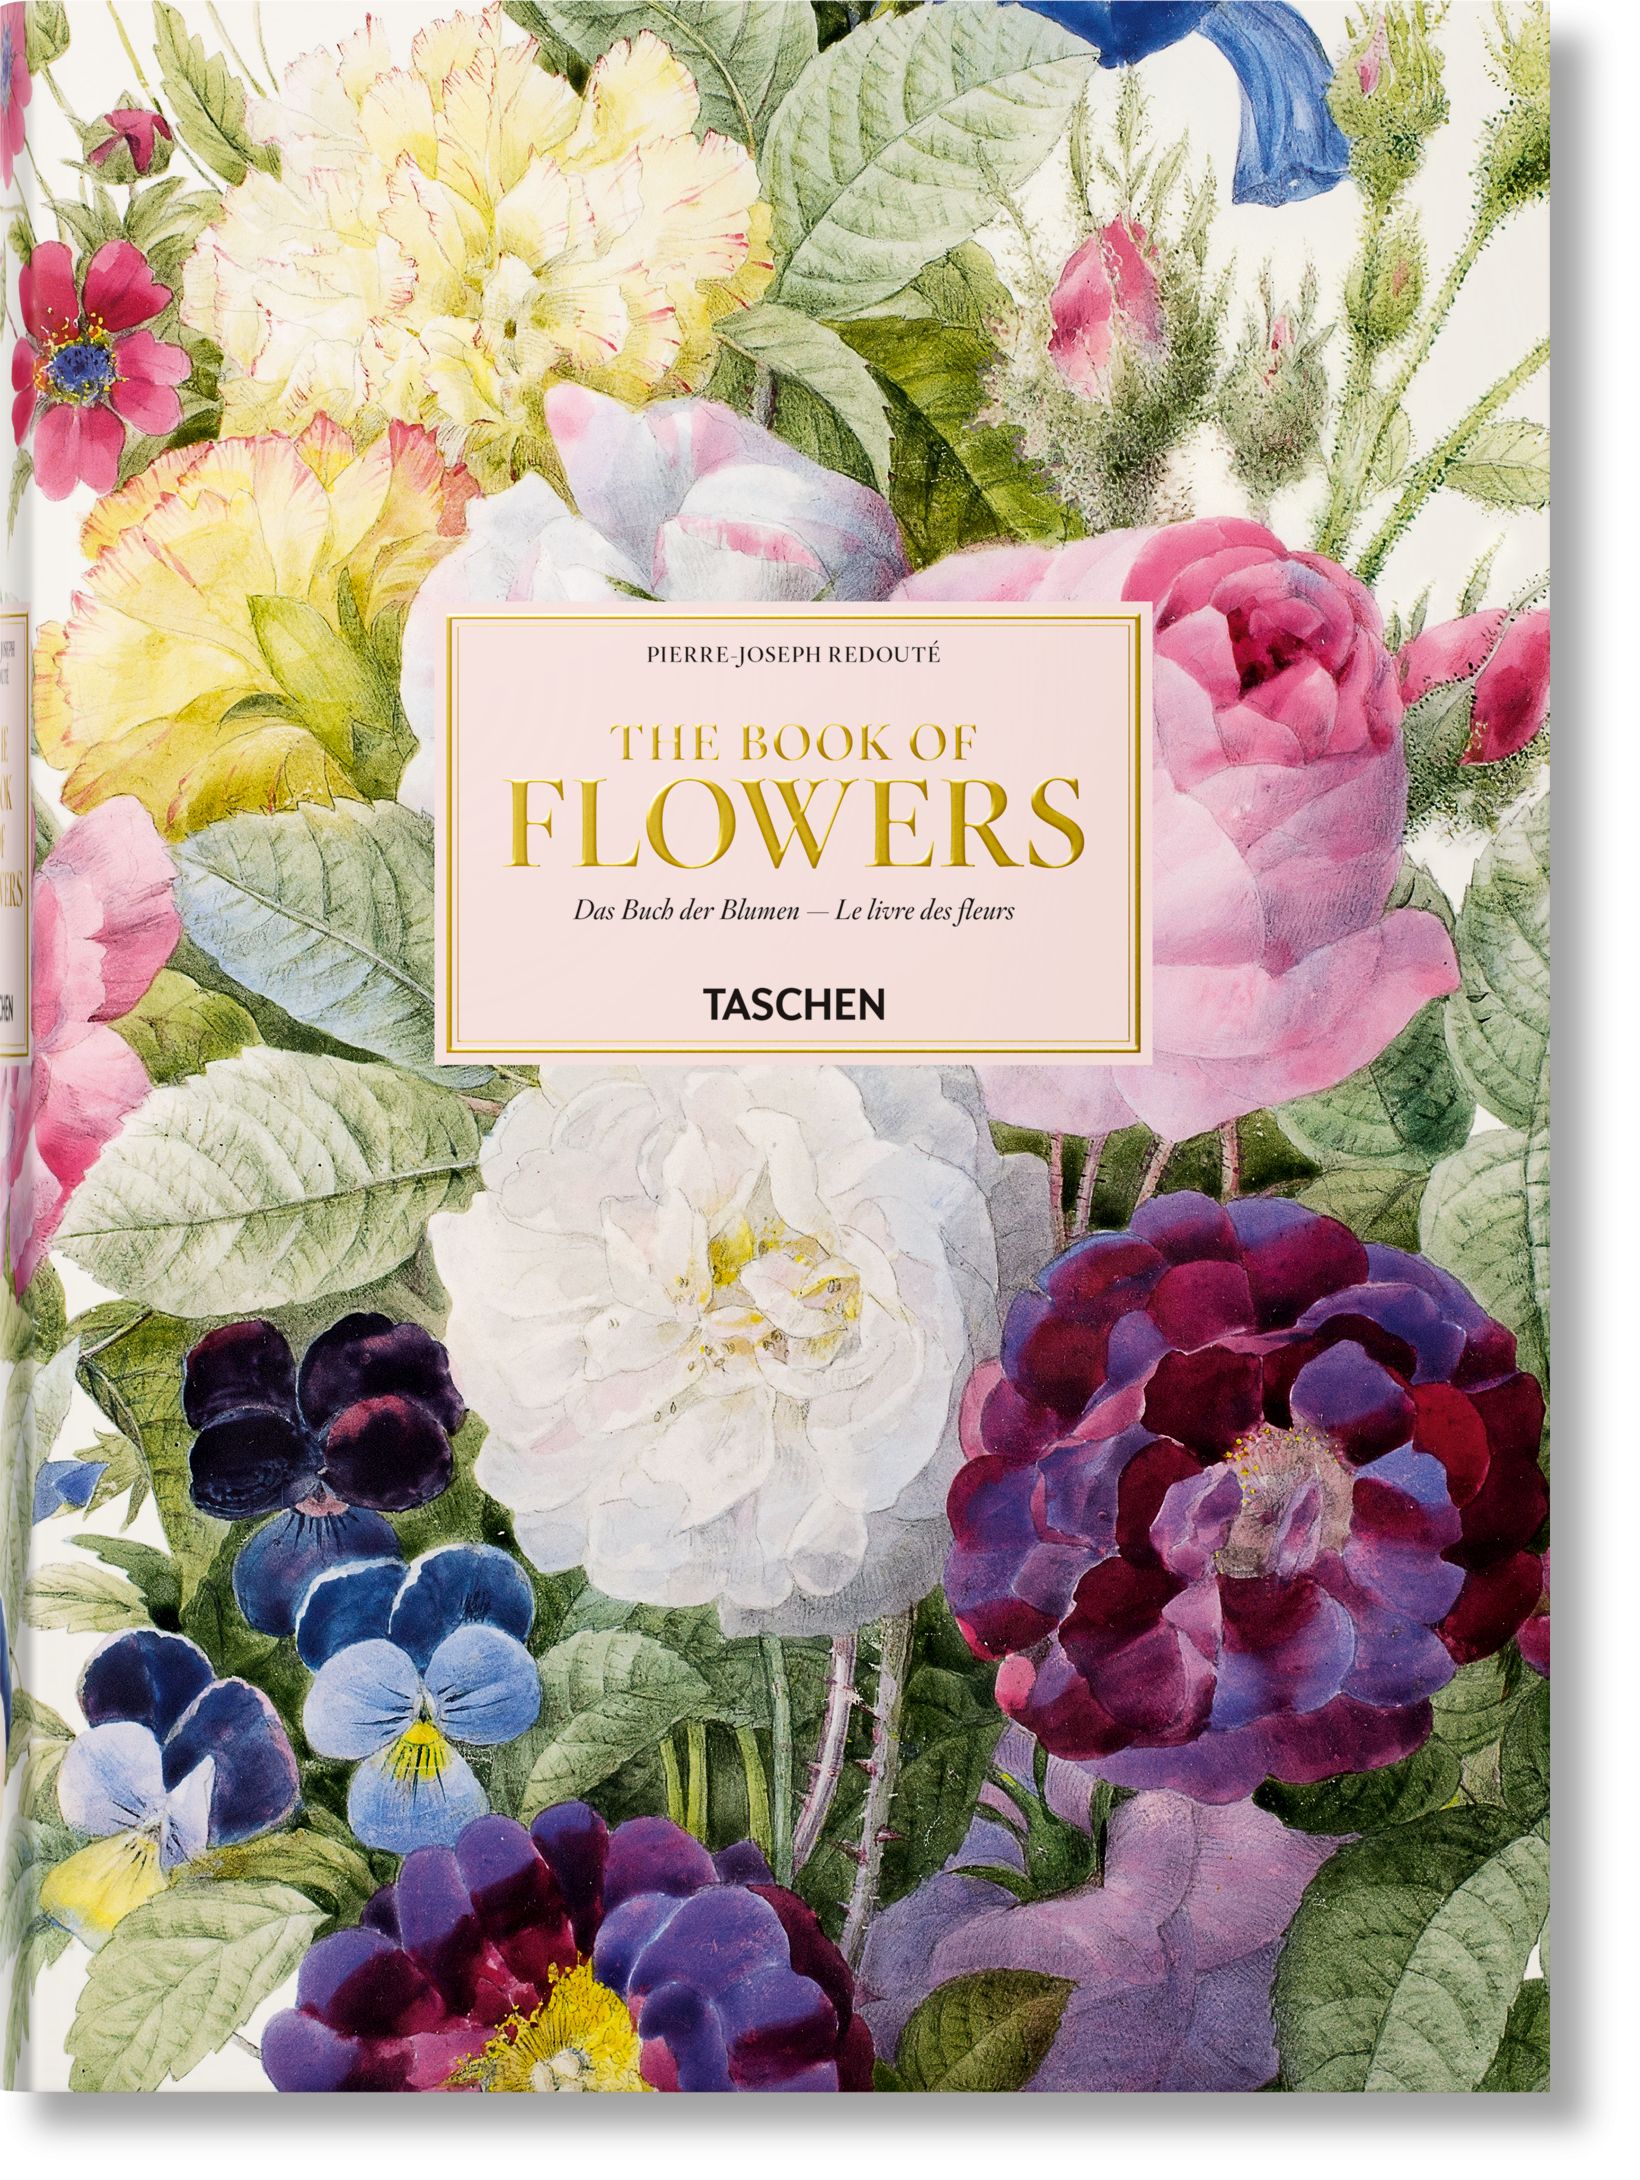 TASCHEN Books: Pierre-Joseph Redouté. The Book of Flowers. | TASCHEN